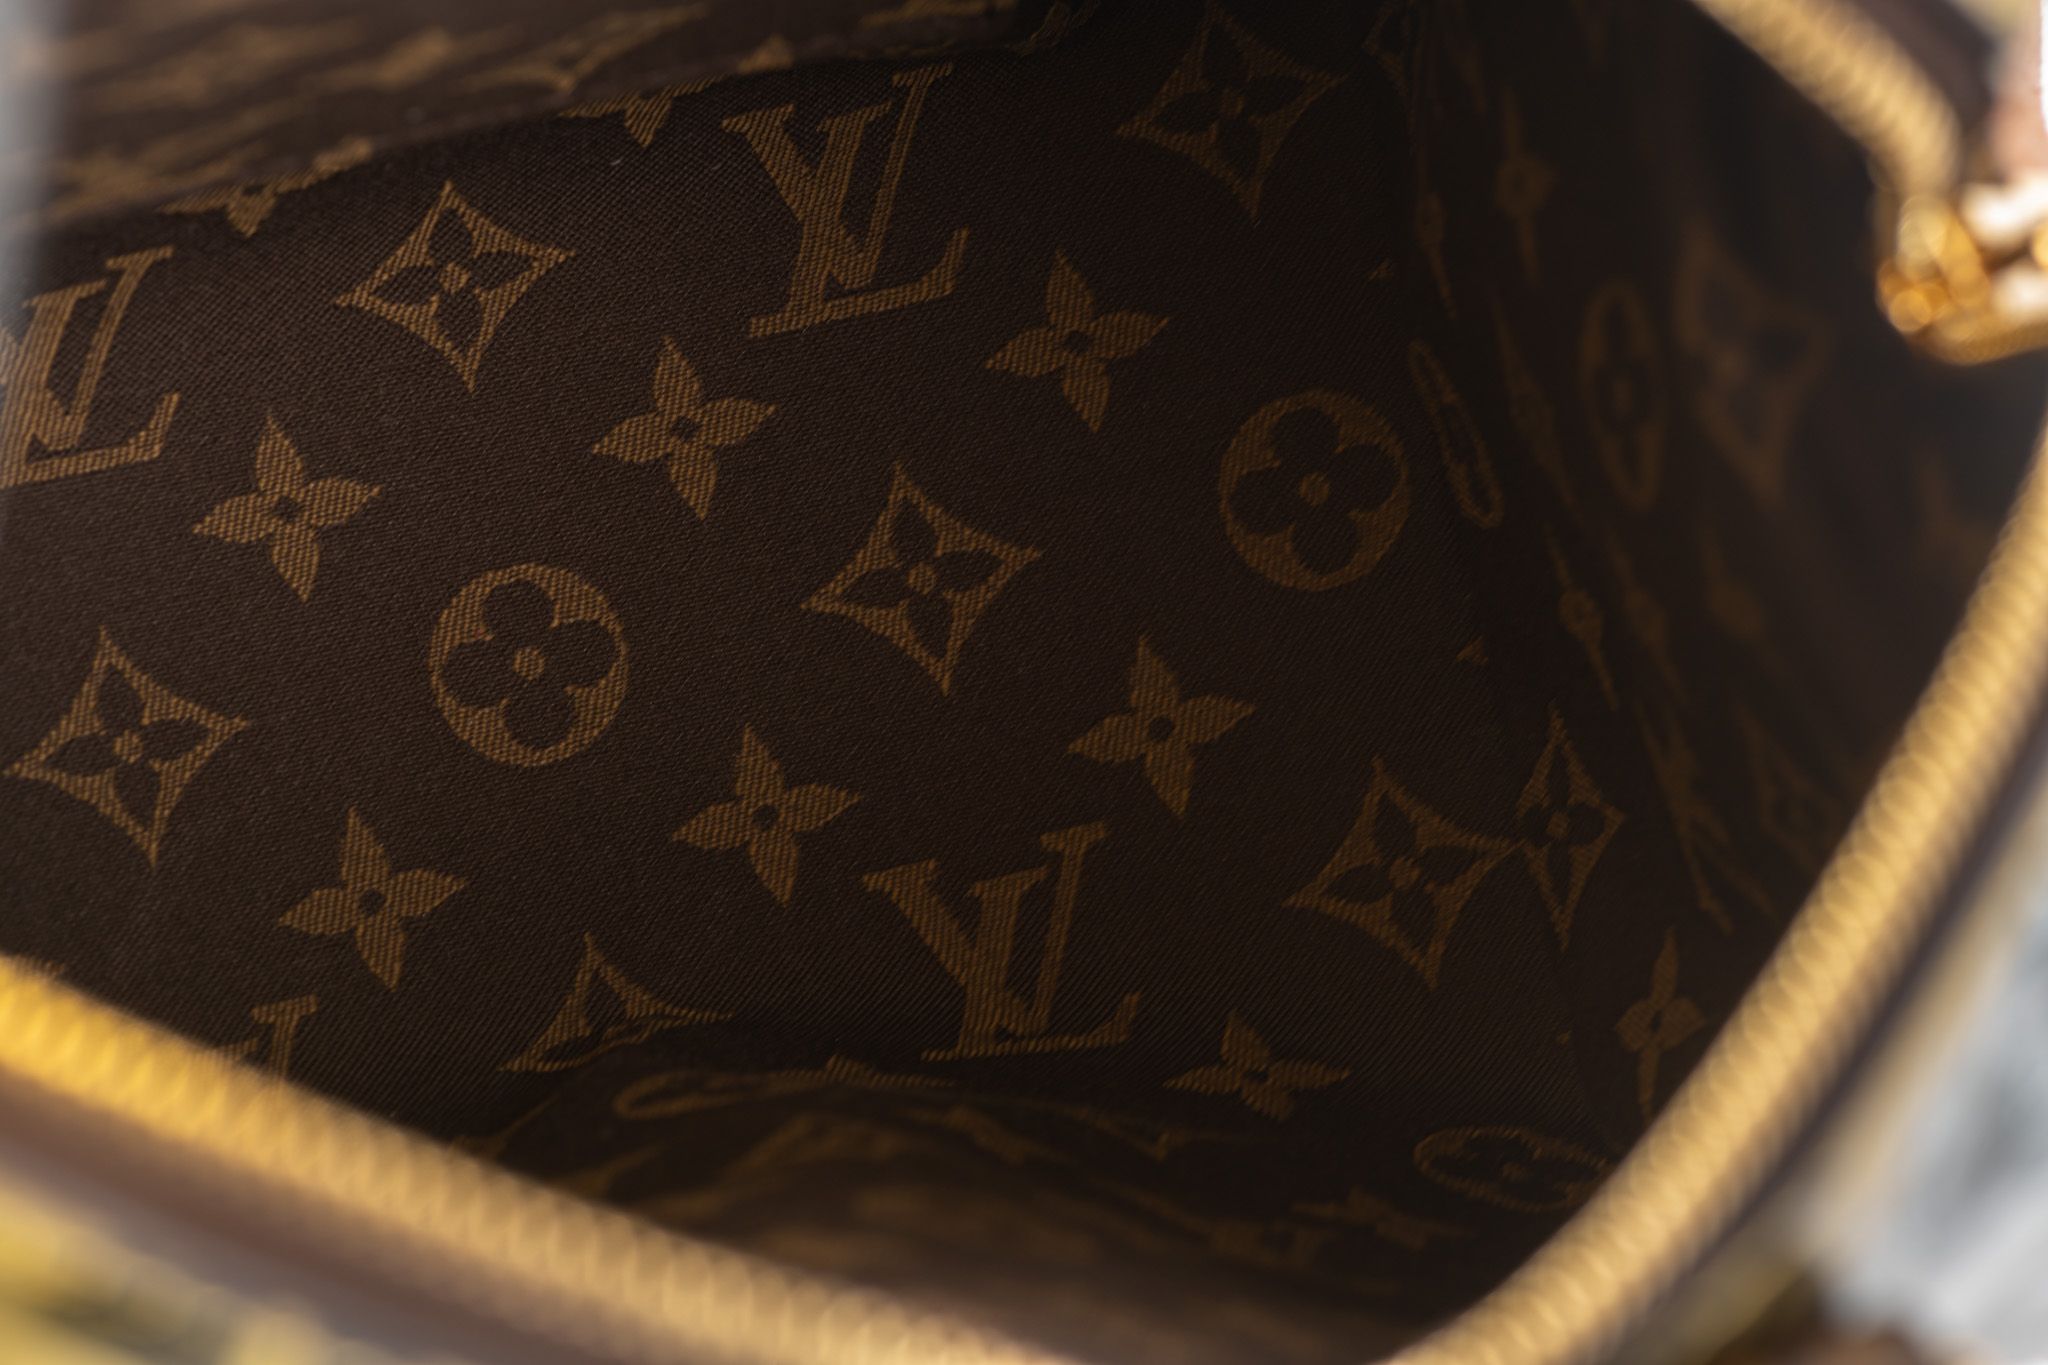 Louis Vuitton x Fornasetti Speedy 25 Bandouliere